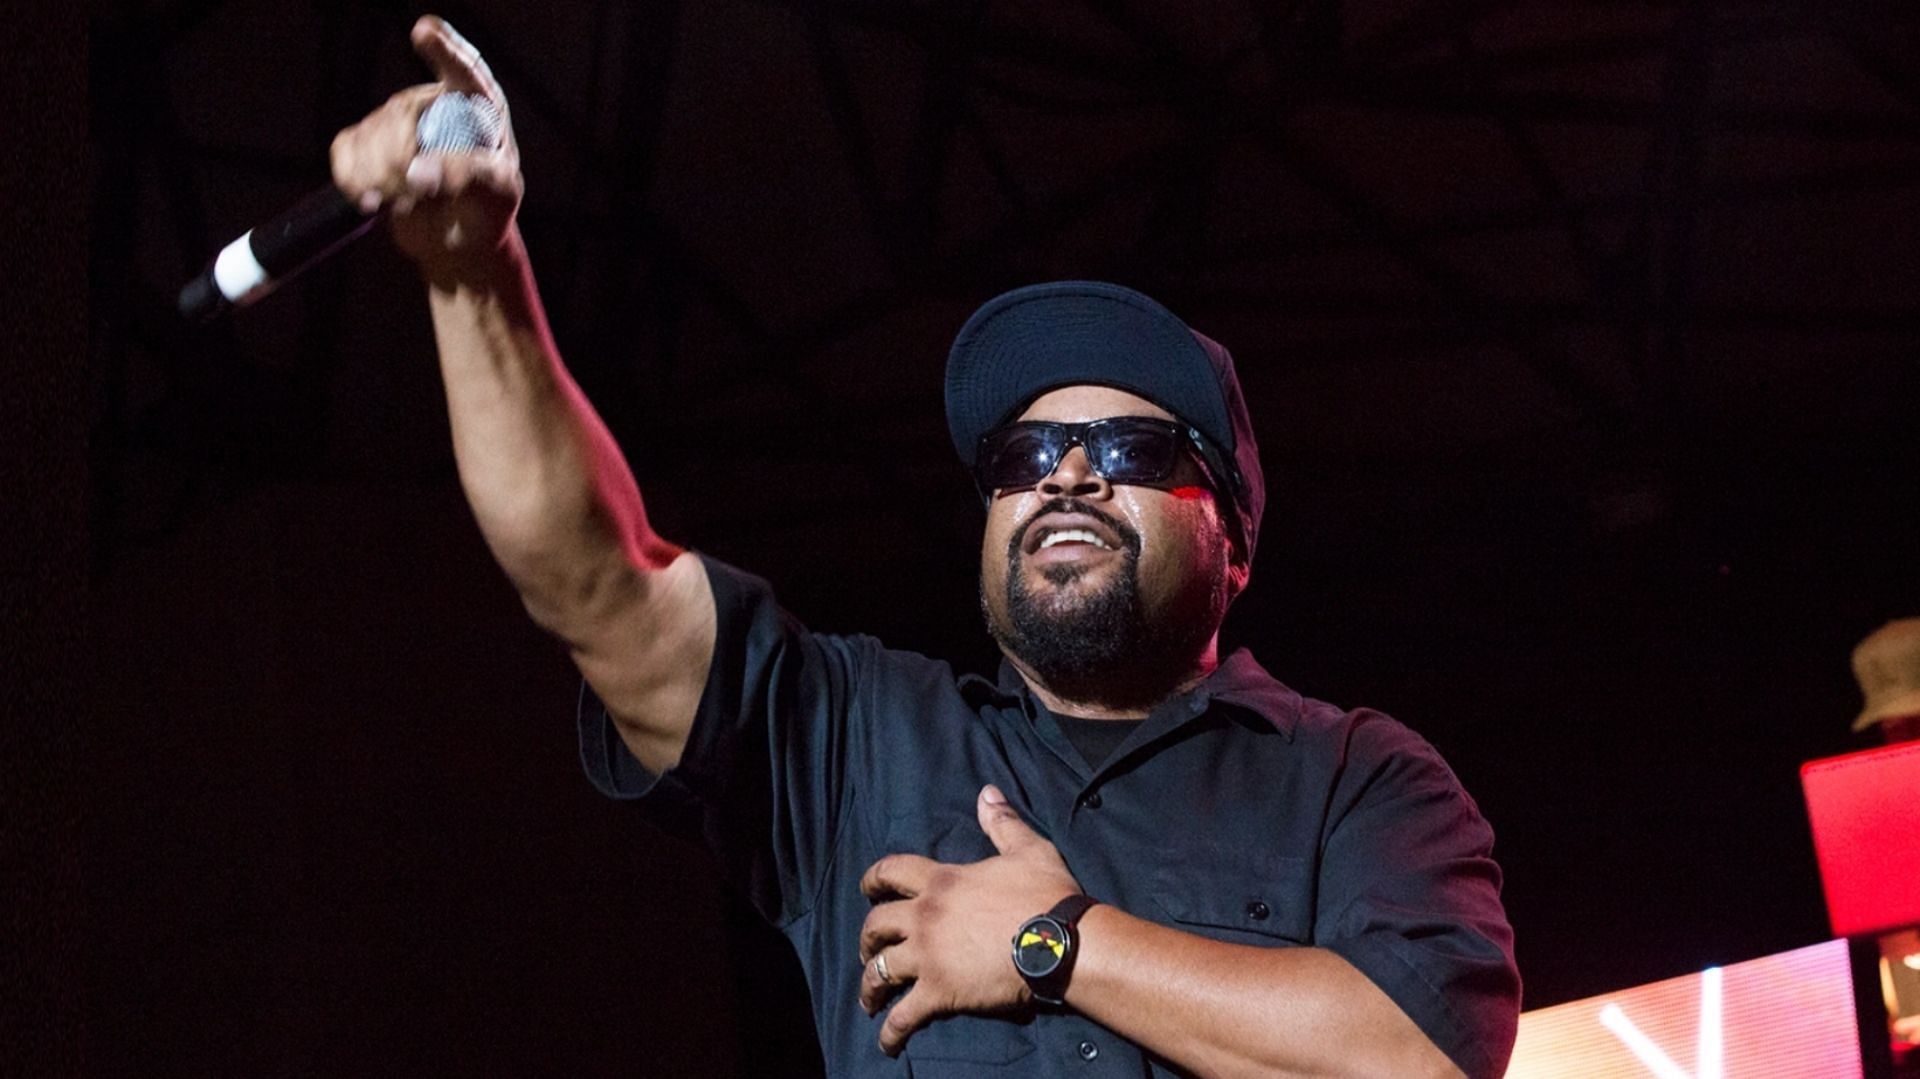 Ice Cube Australia Tour 2023 Tickets, presale, where to buy, dates